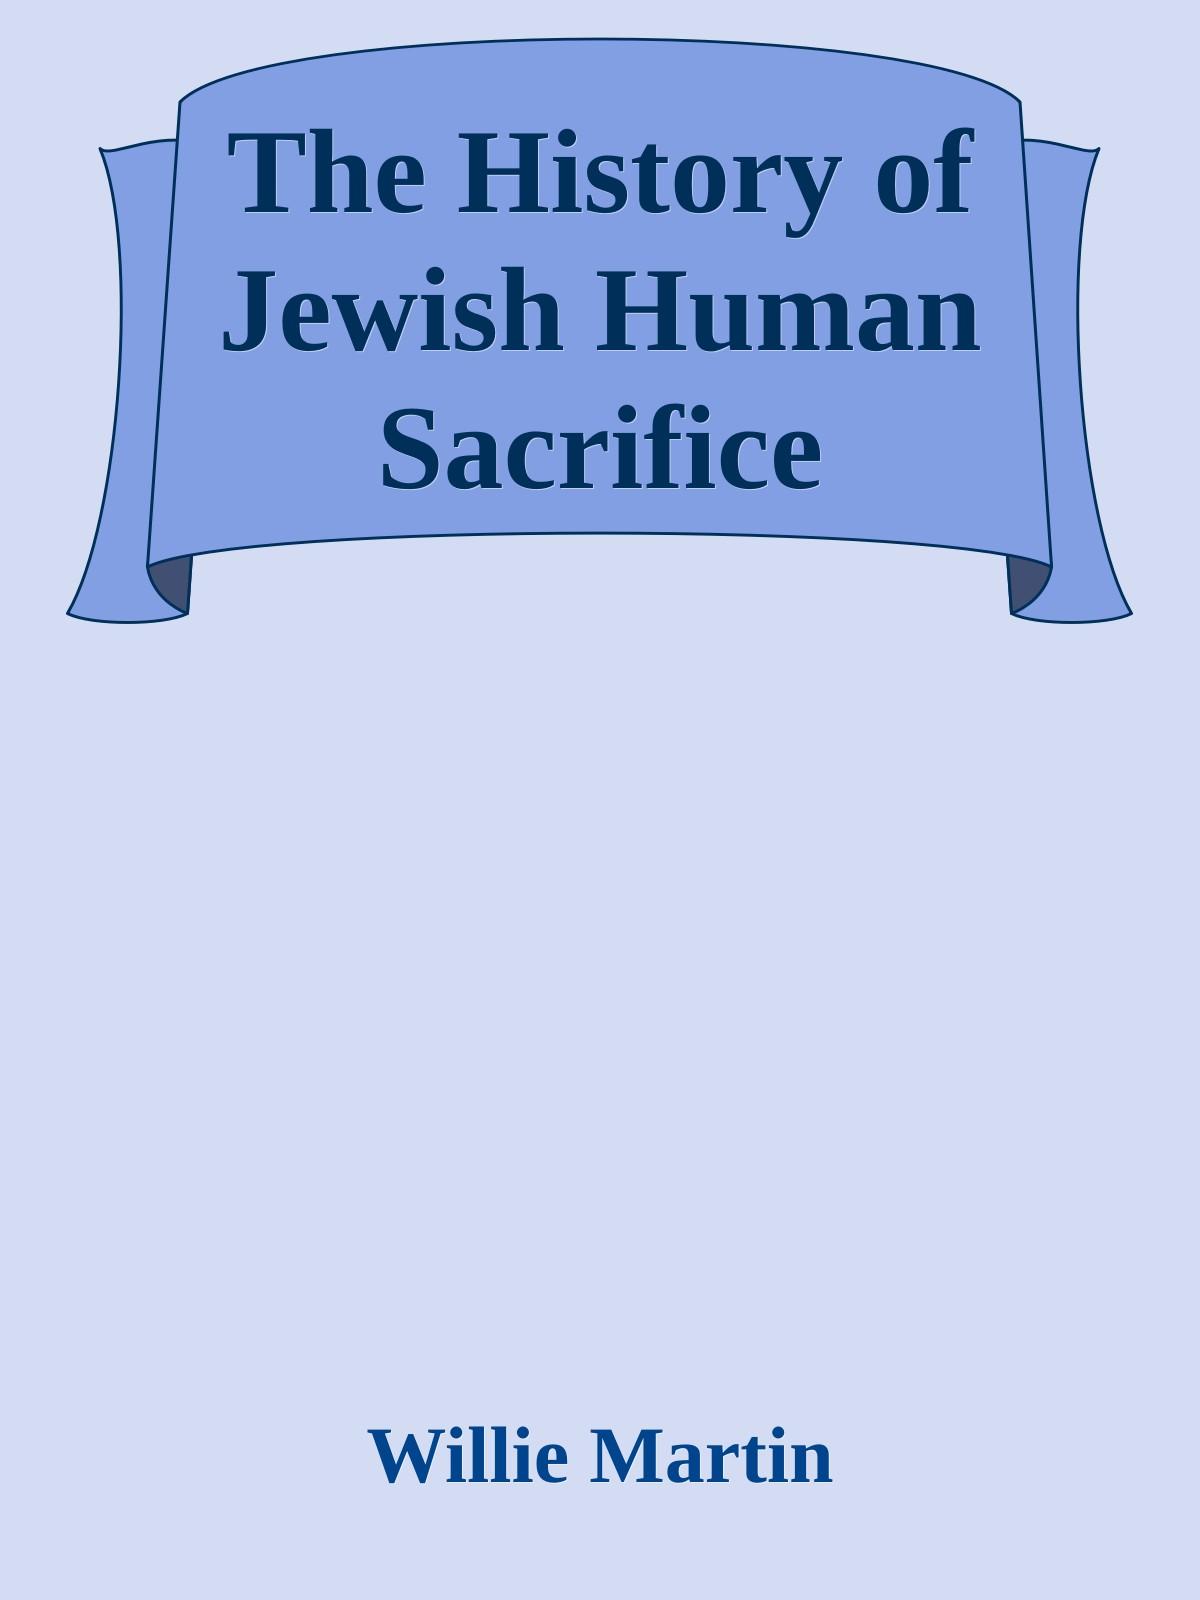 The History of Jewish Human Sacrifice (2014) by Willie Martin